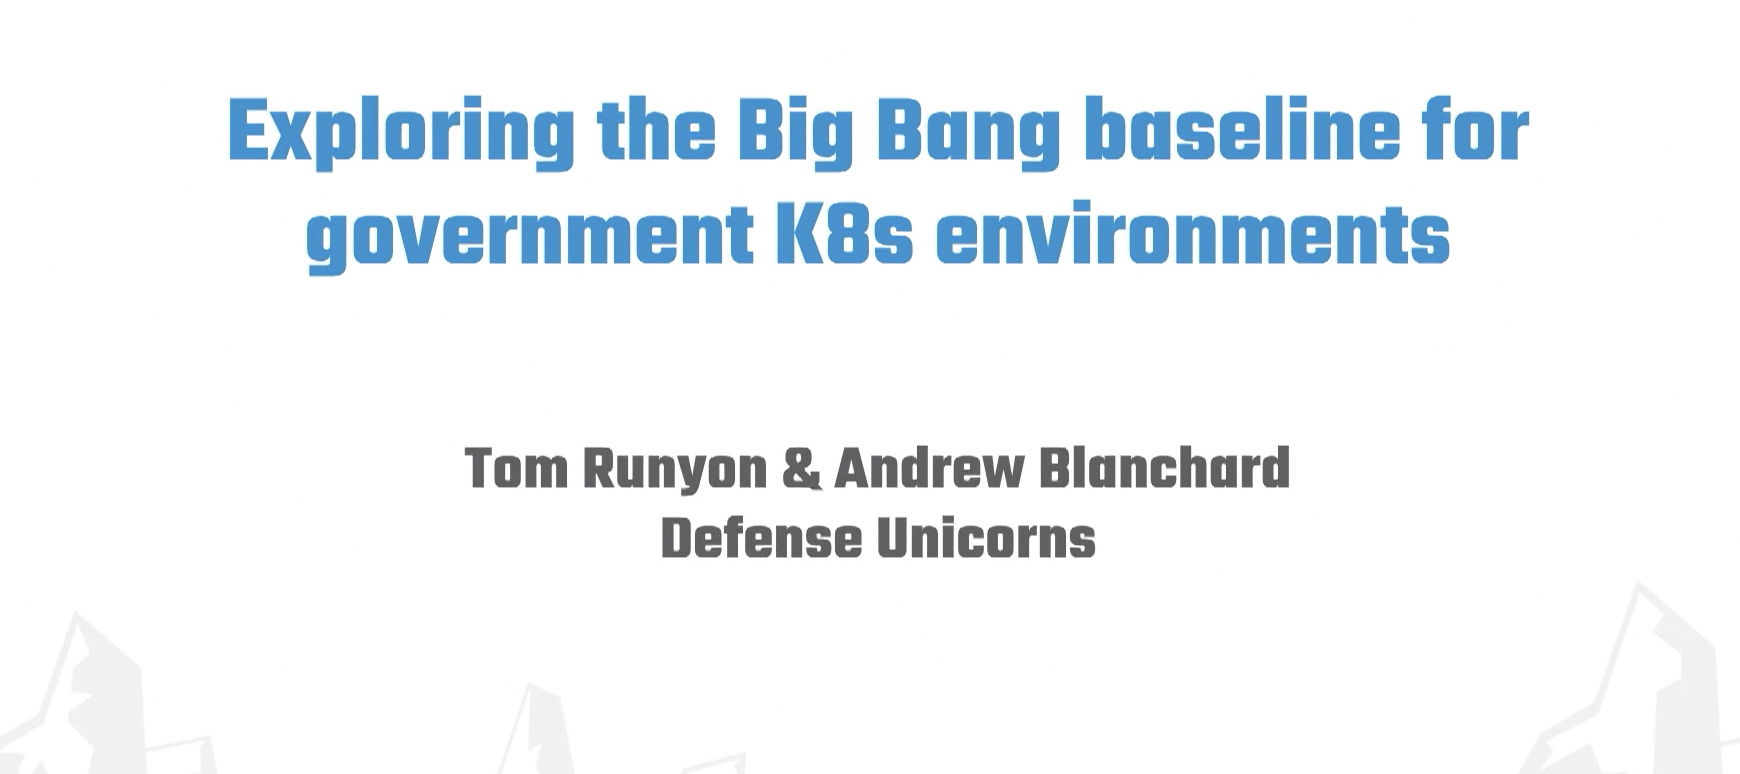 Exploring the Big Bang baseline for government K8s environments